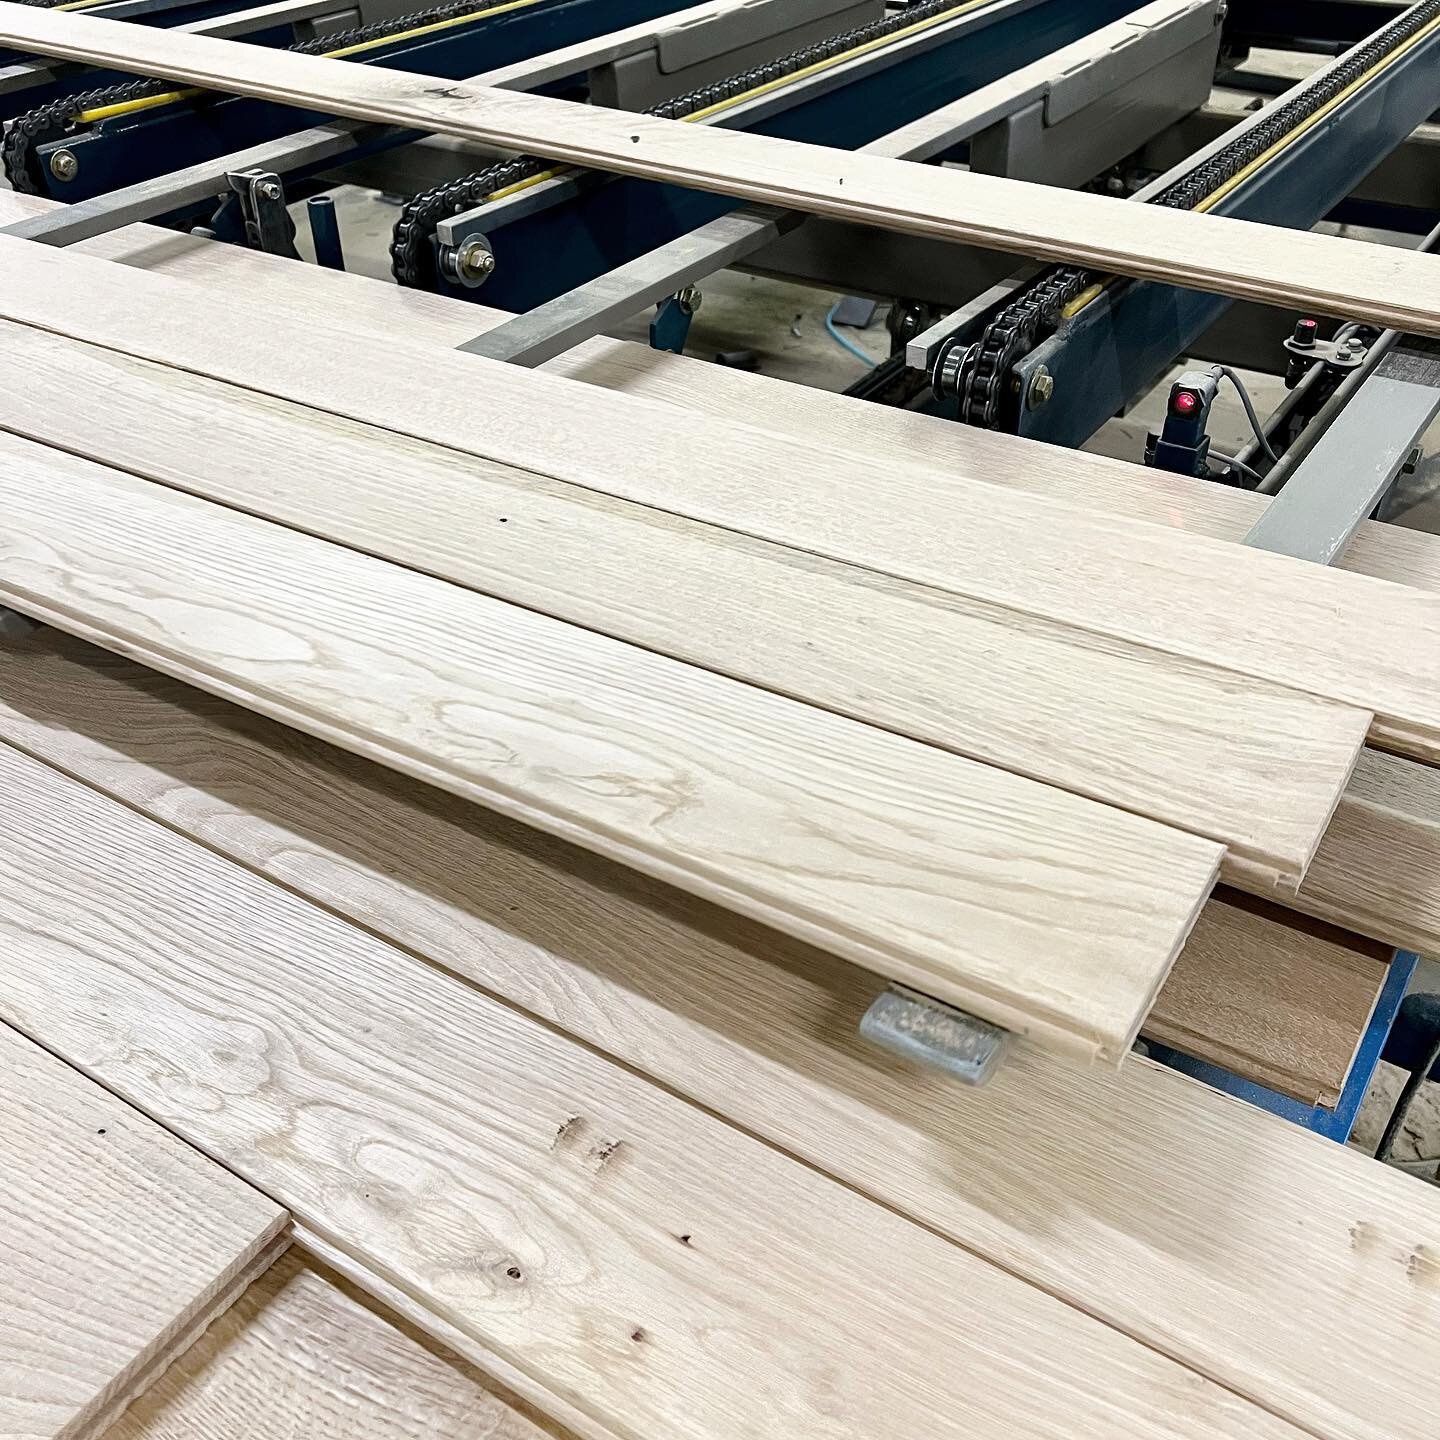 #smartstacker stacking up random width floor planks coming off the moulder line @eutree.
.
.
.

#materialshandling #lumbermachine #conveyor #conveyors #conveyorsystems #lumberequipment #lumberhandling #lumberautomation #lumberprocessing #woodsorting 